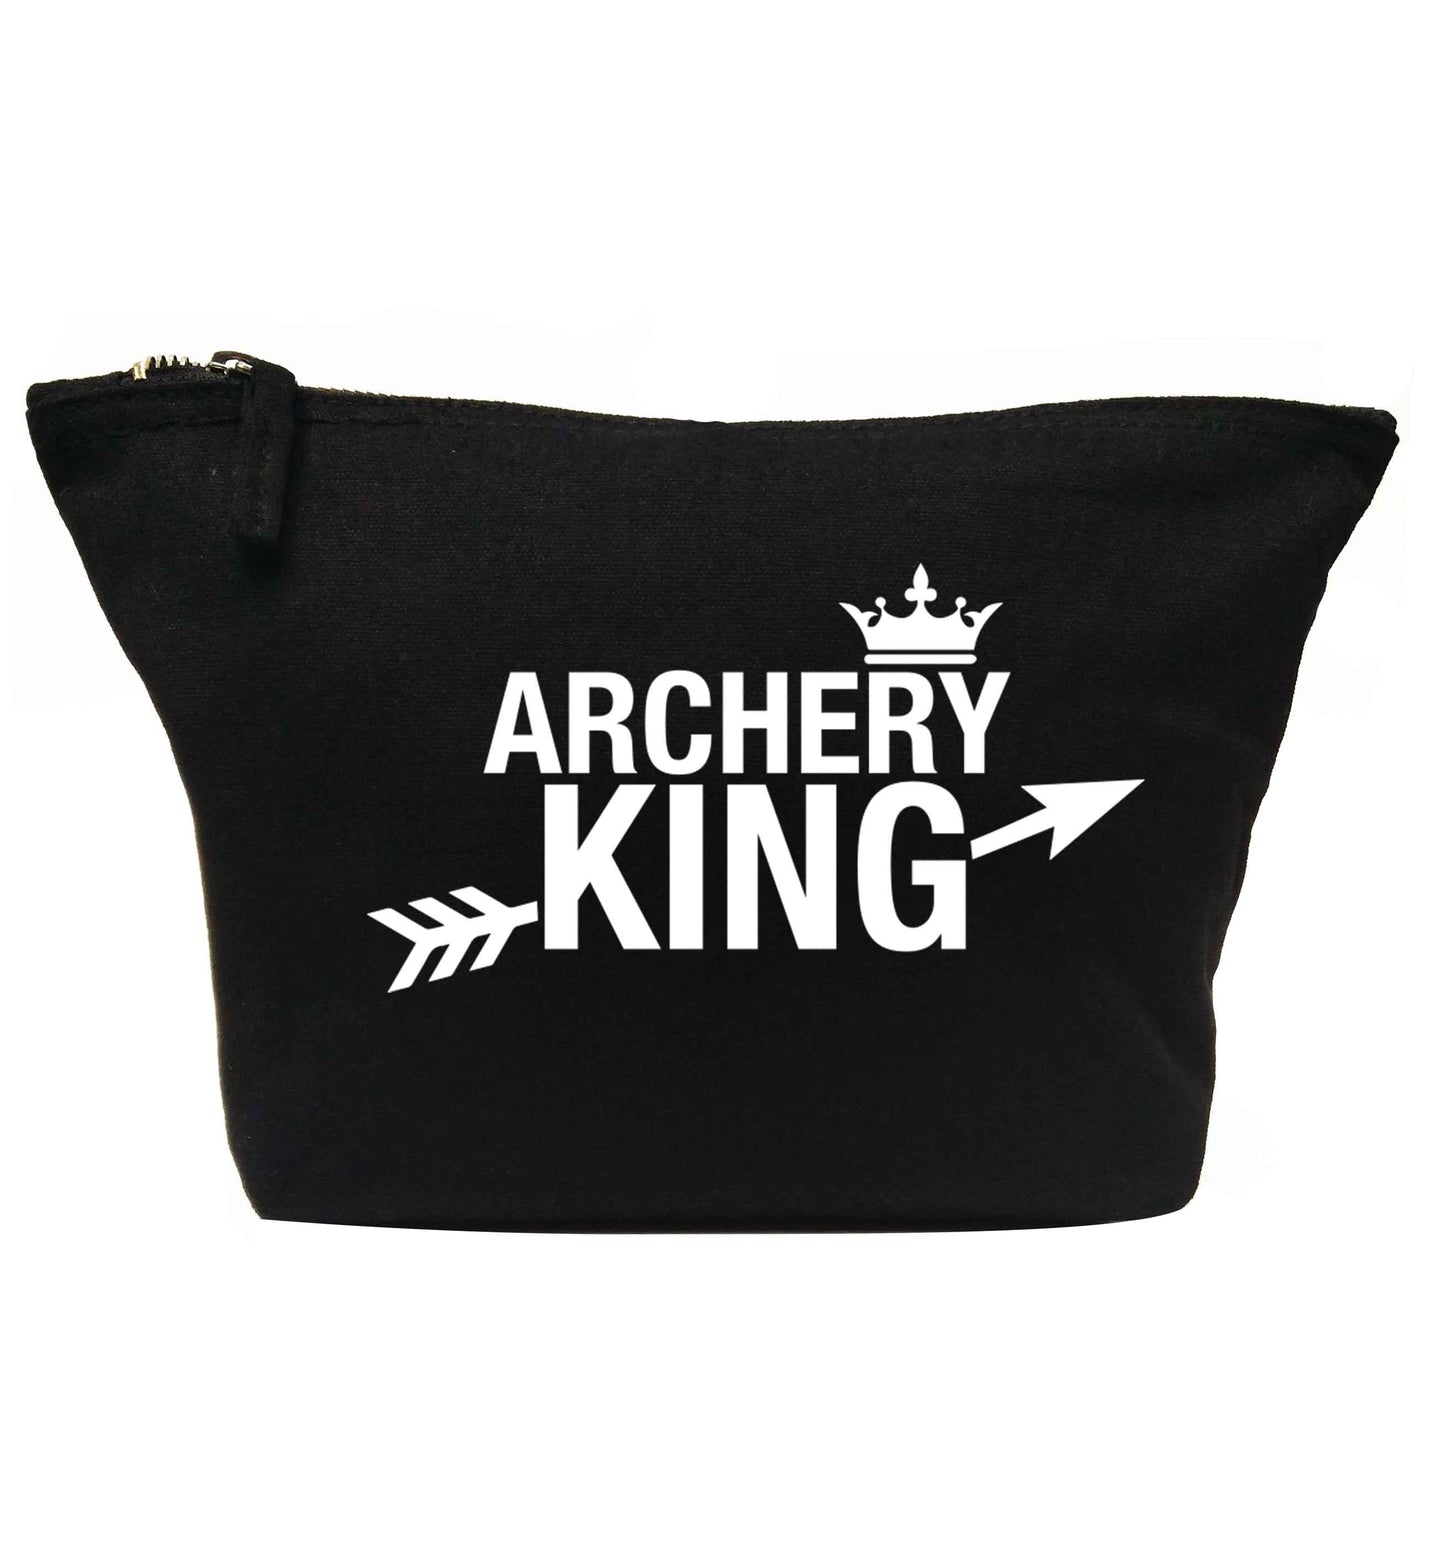 Archery king | makeup / wash bag